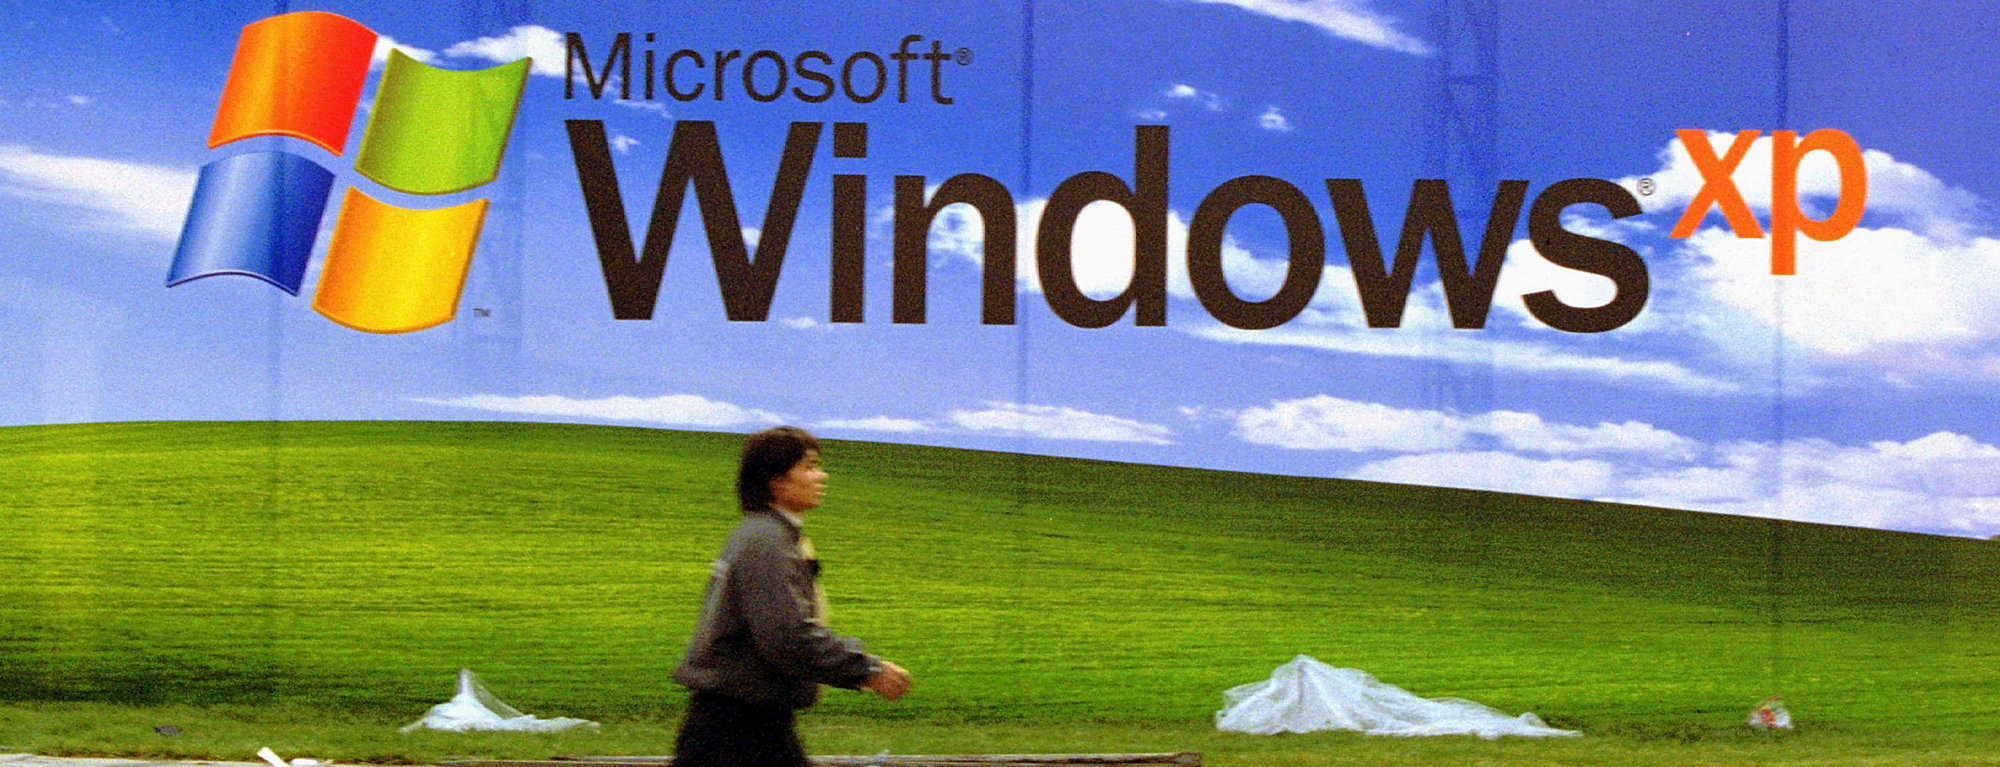 Windows XP Pro Wallpaper 42 pictures